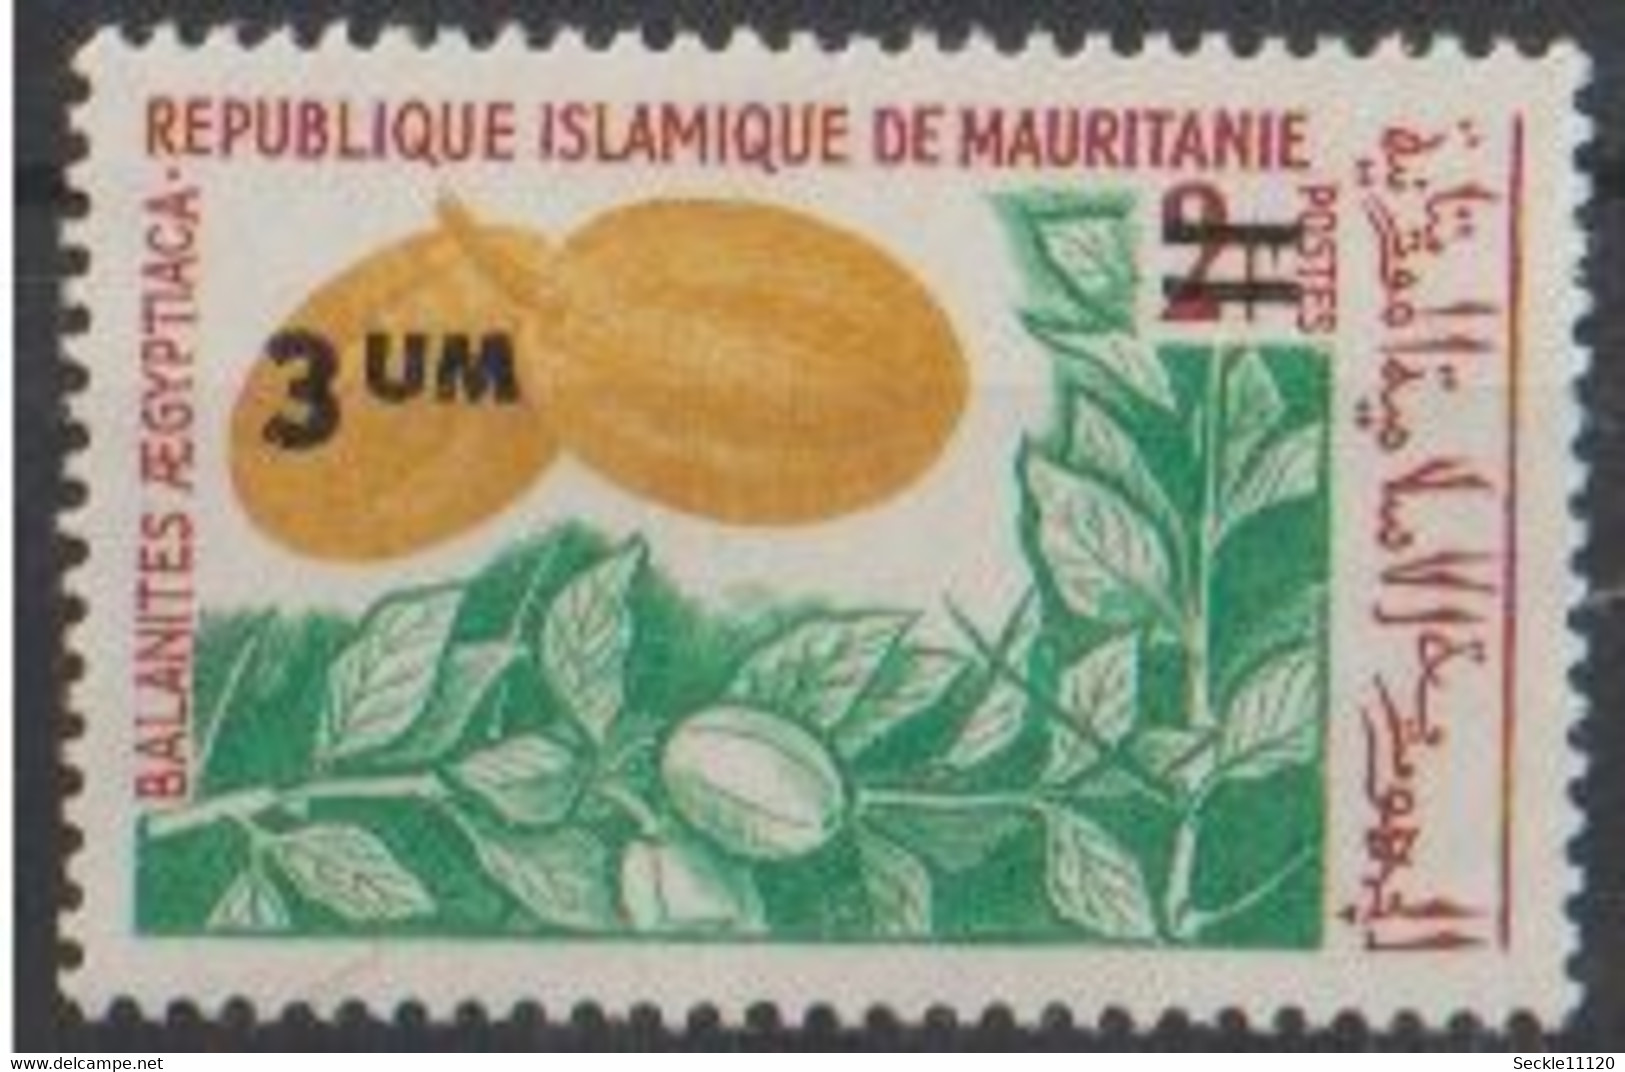 Mauritanie Mauritania - 1975 - 328 / 329 / 330 / 331 / 332 - Fruits - Surchargé - MNH - Mauritanie (1960-...)